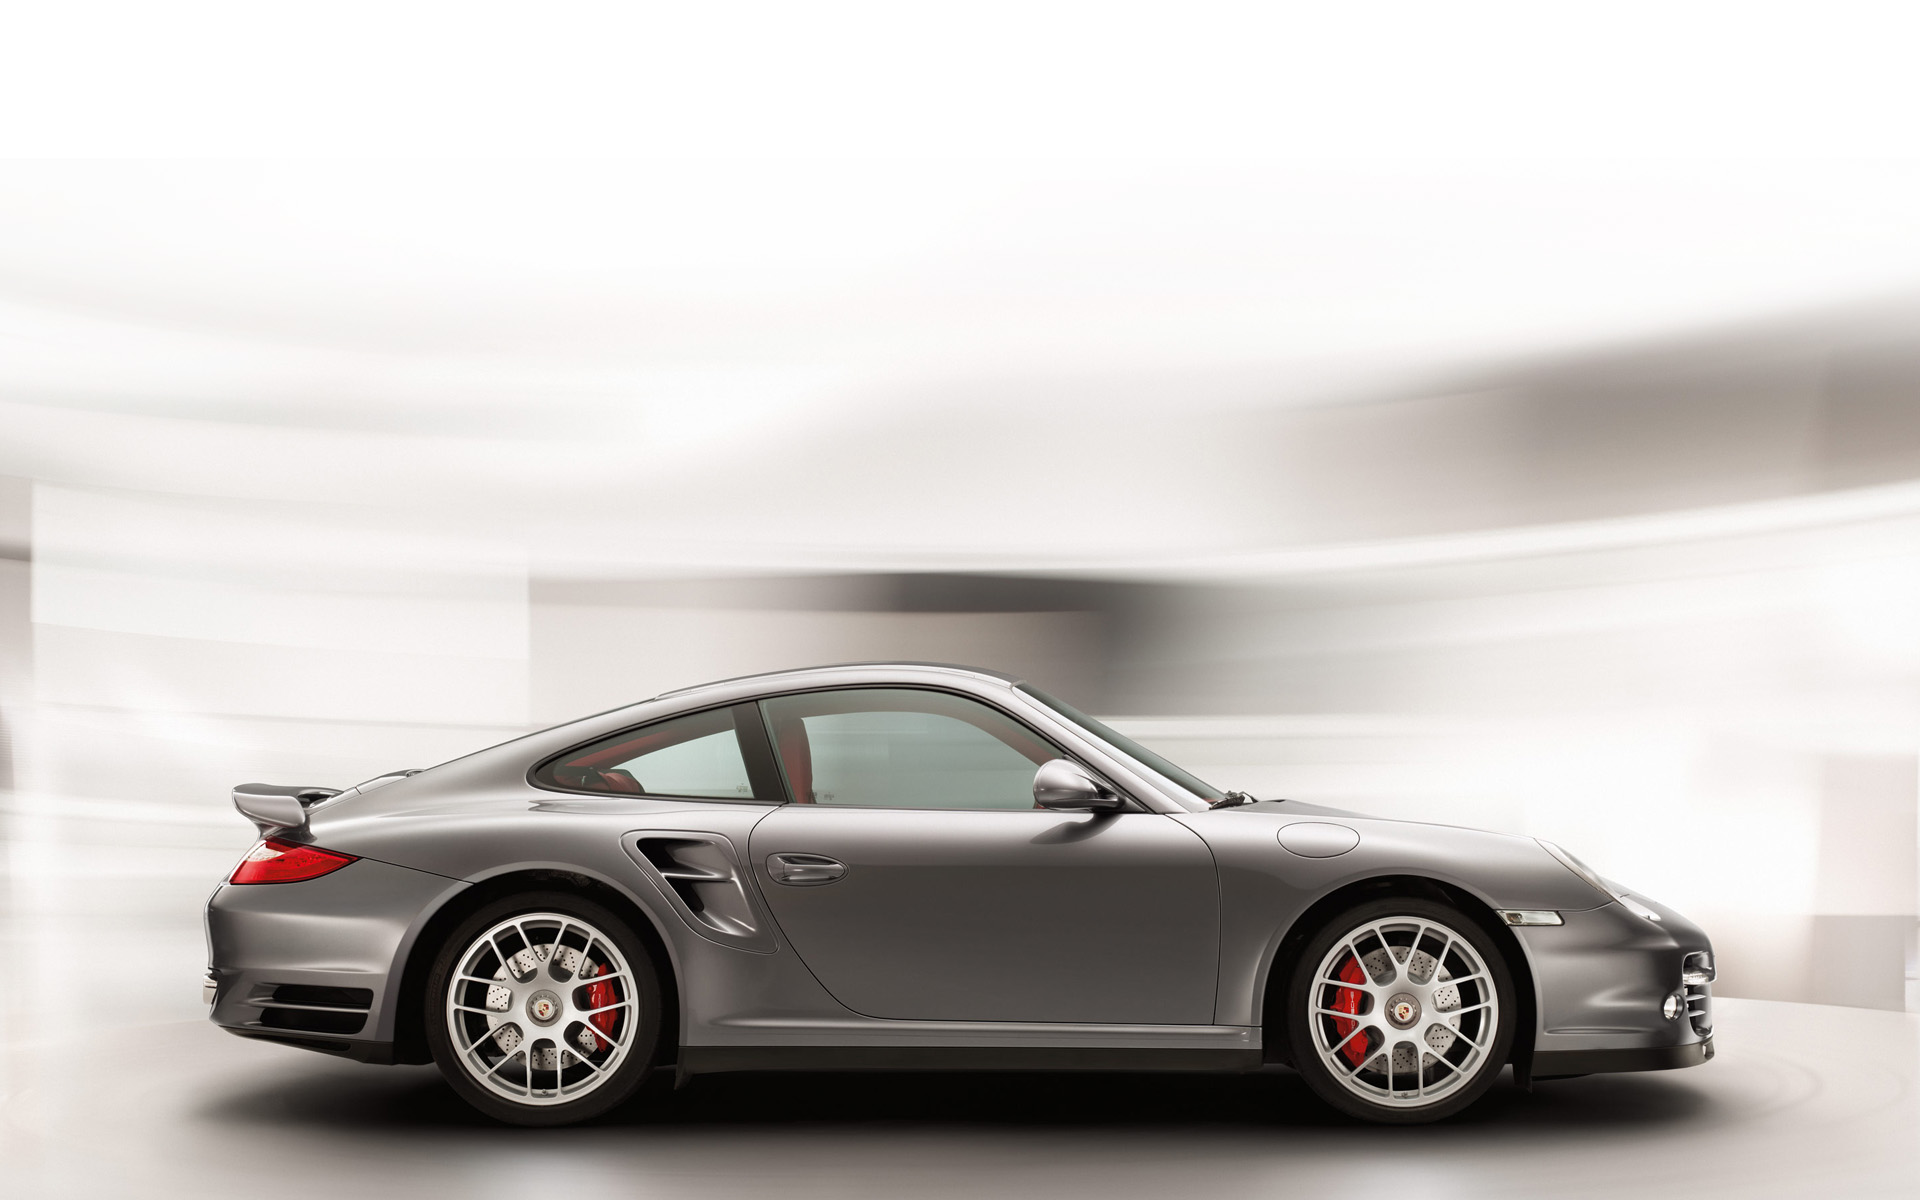  2010 Porsche 911 Turbo Wallpaper.